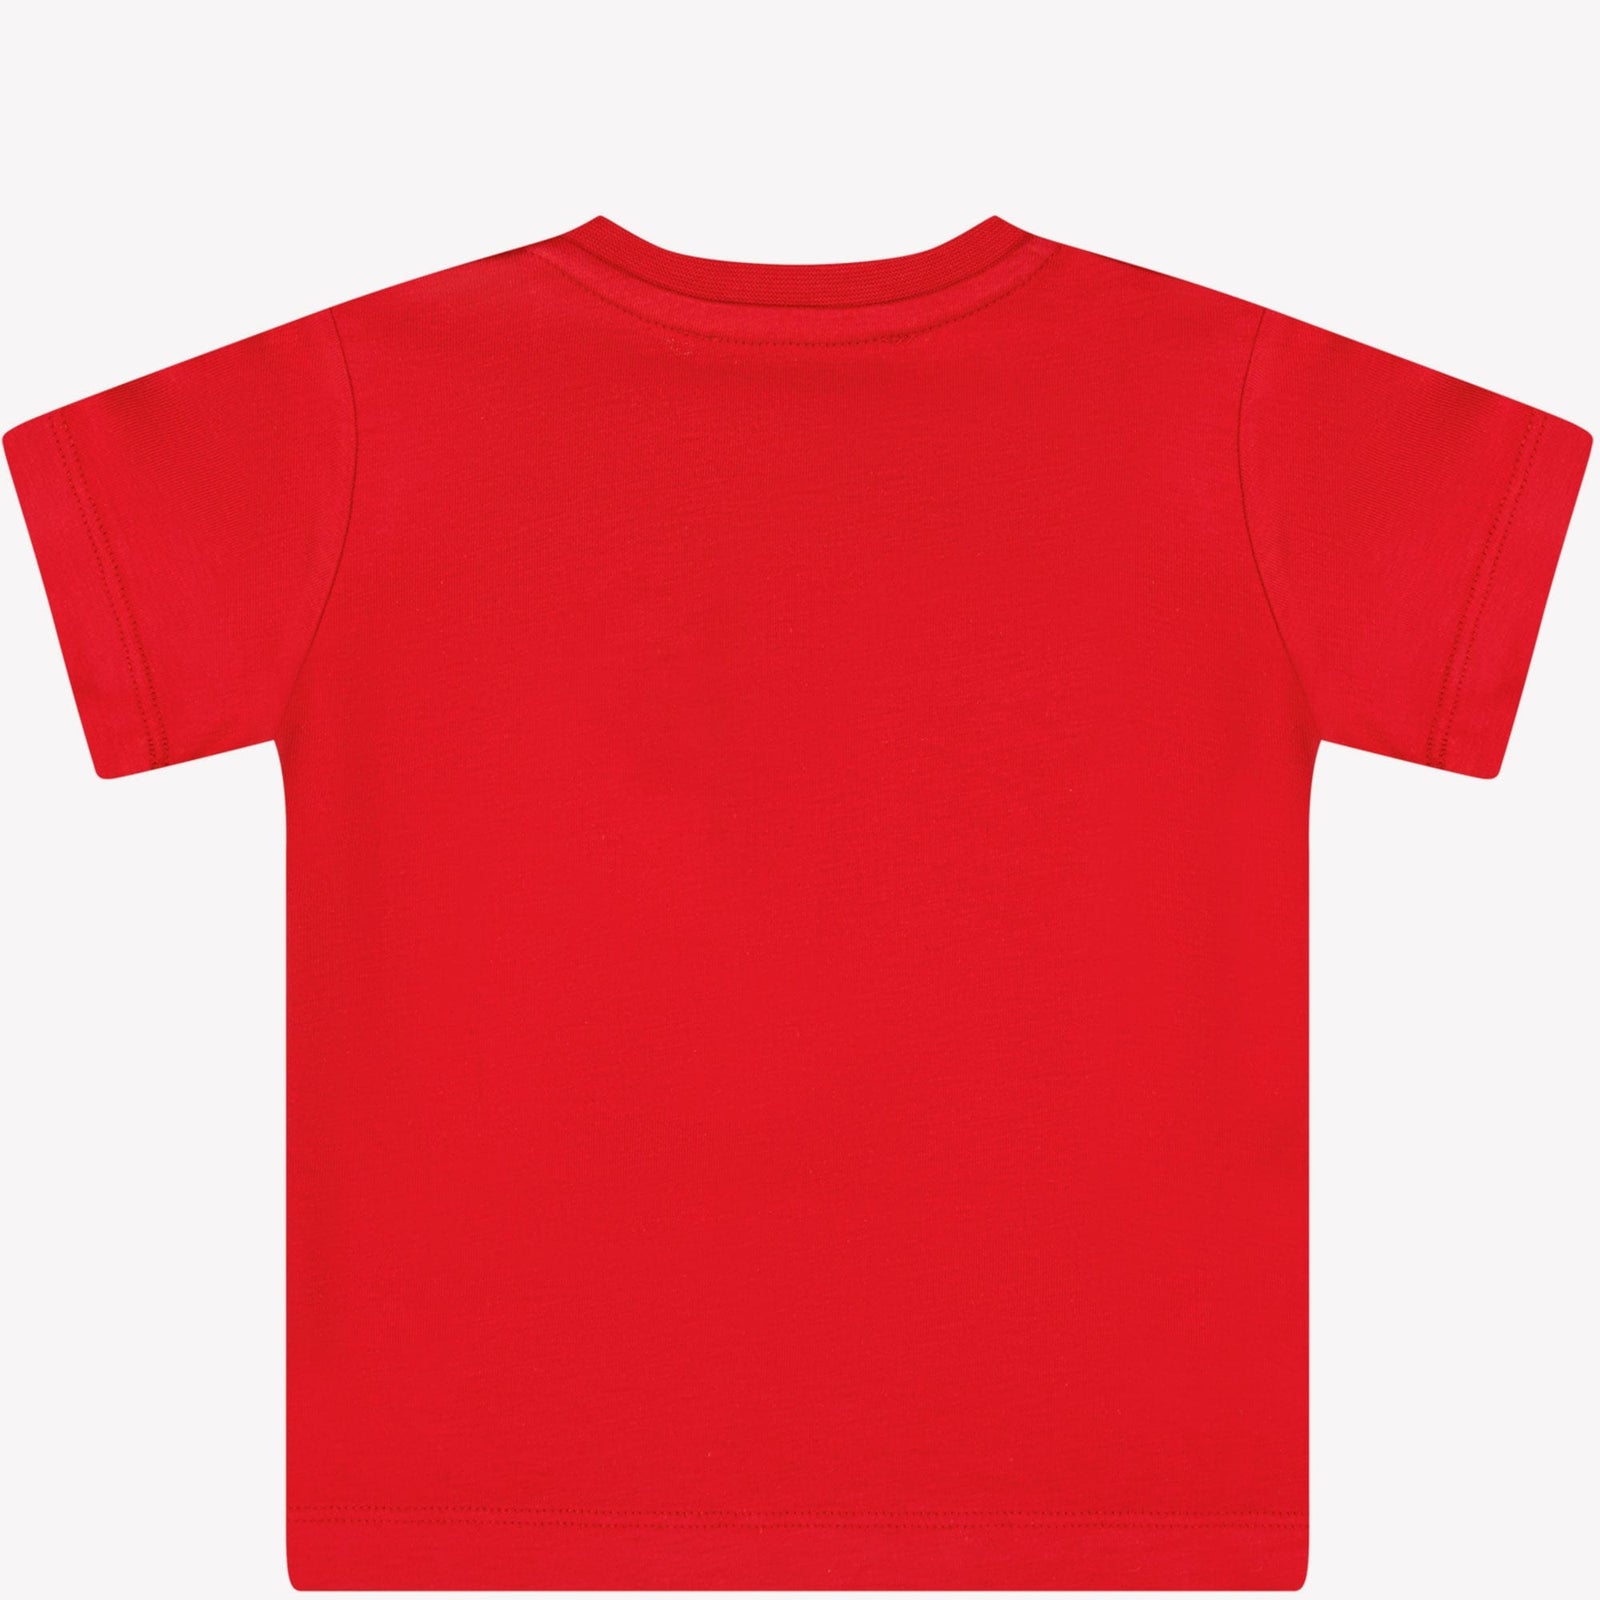 Iceberg Baby Jongens T-shirt Rood 6 mnd